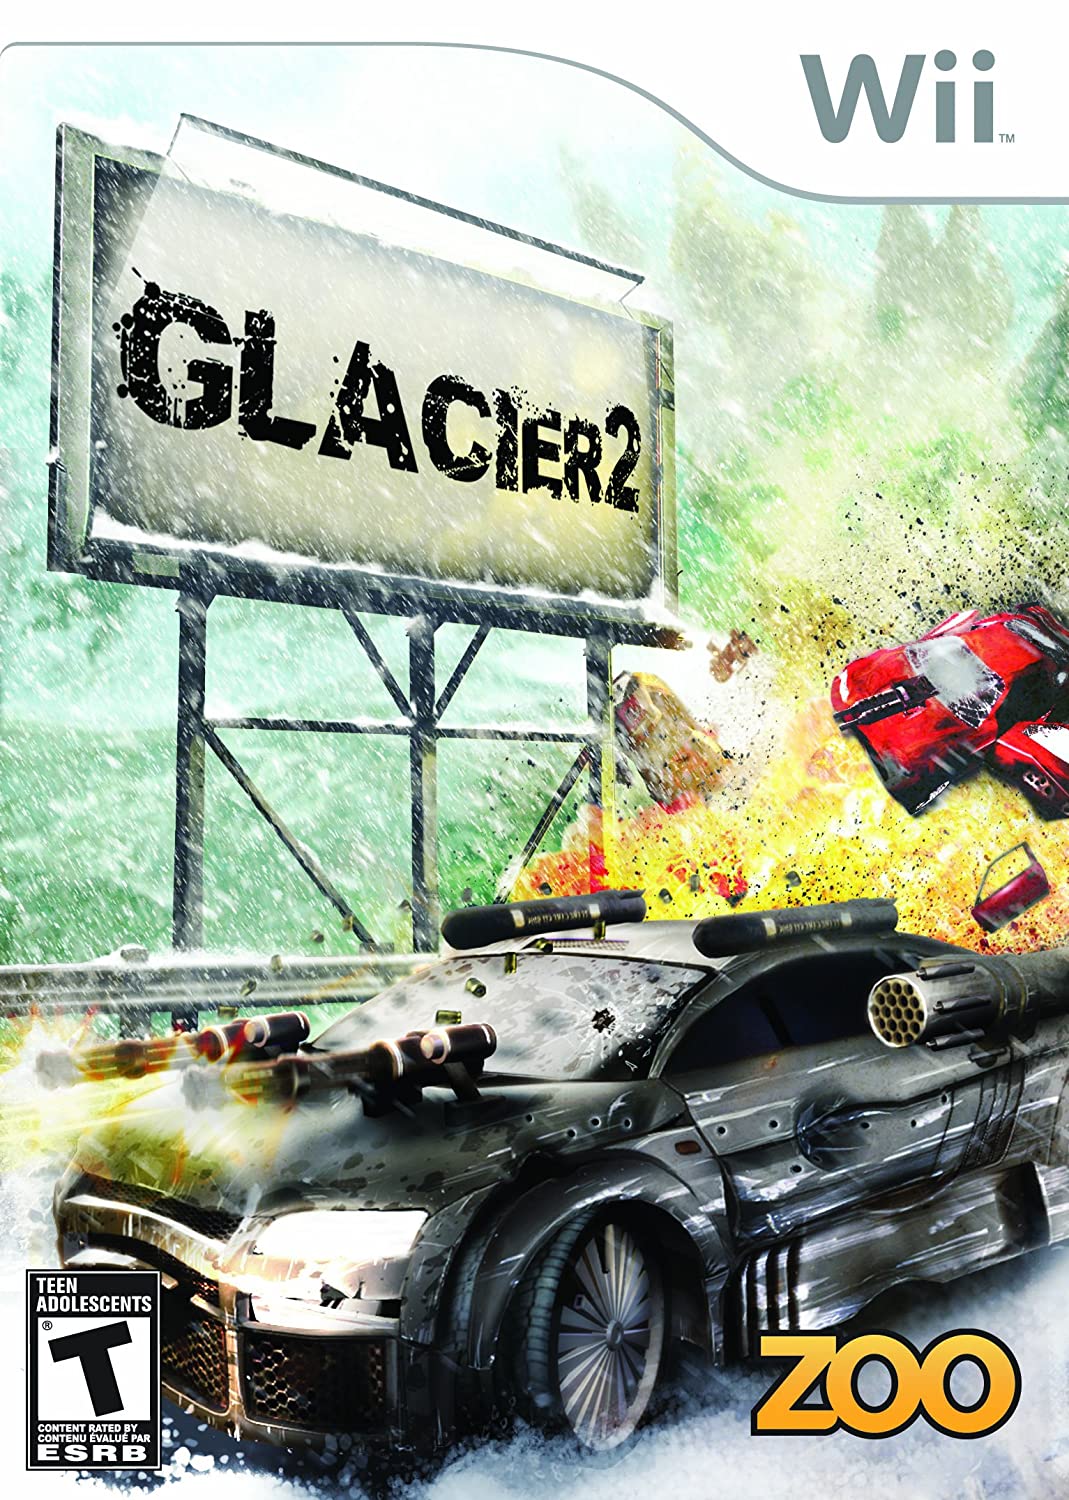 Glacier 2 player count stats